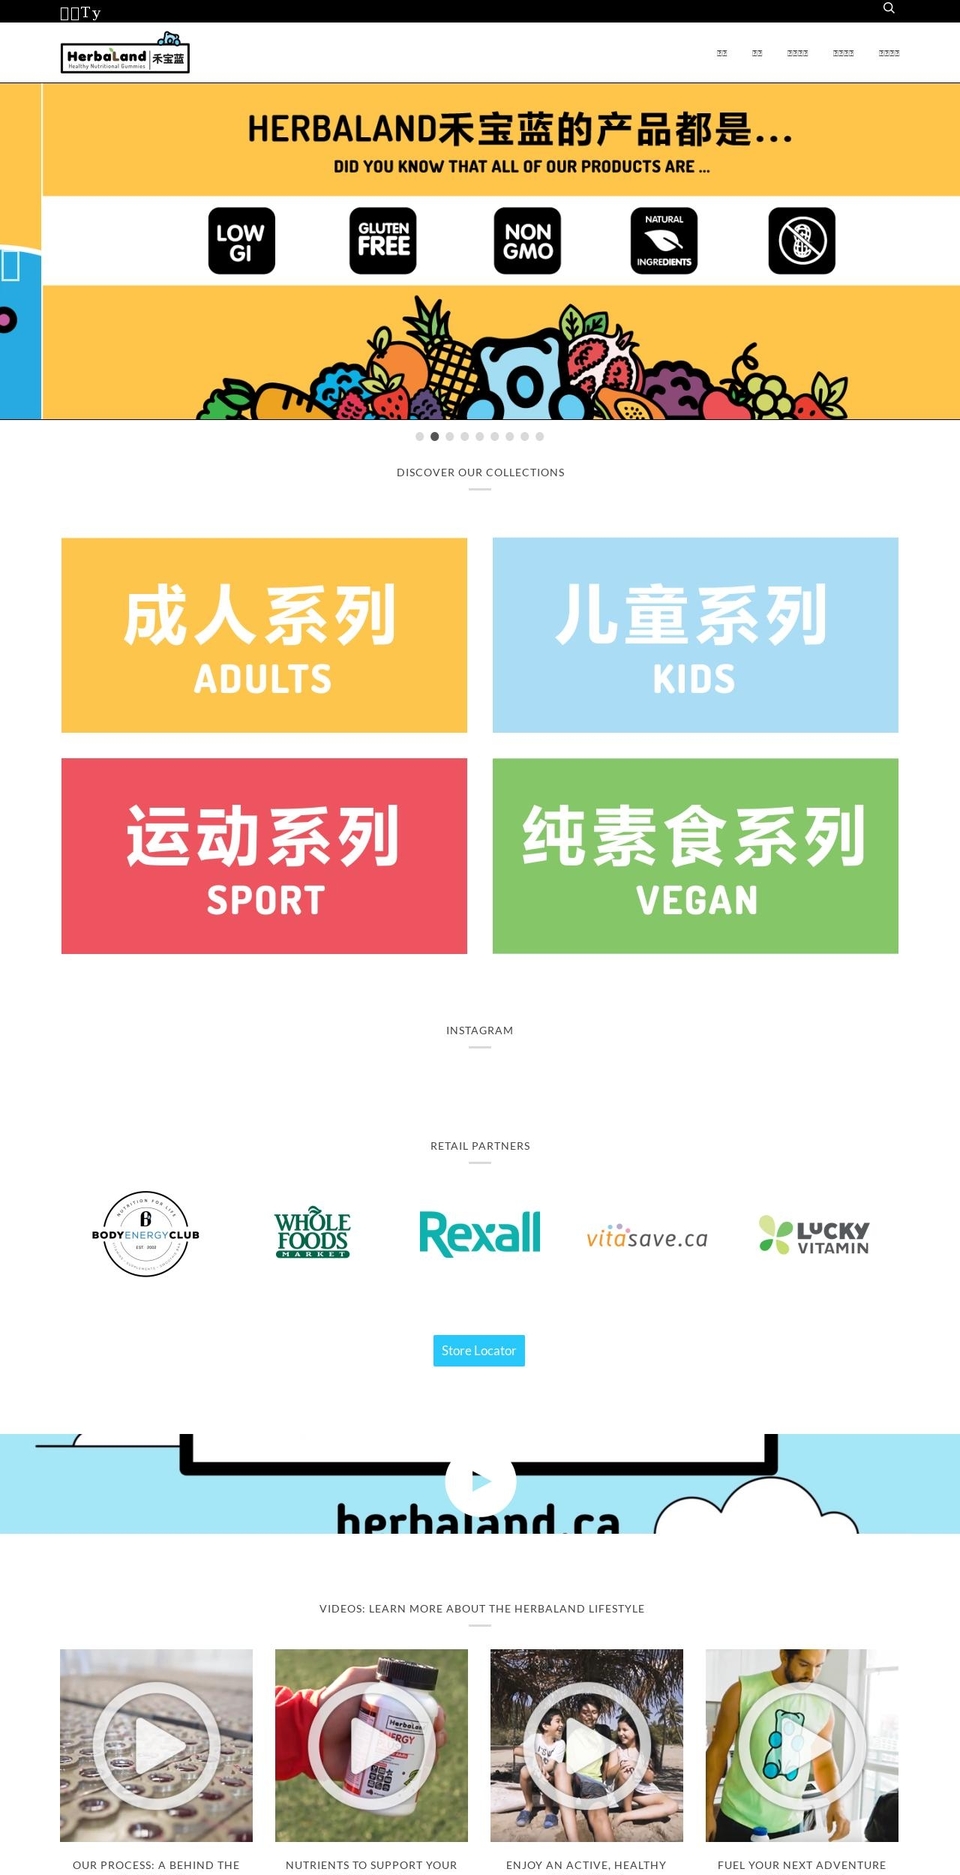 herbaland.cn shopify website screenshot